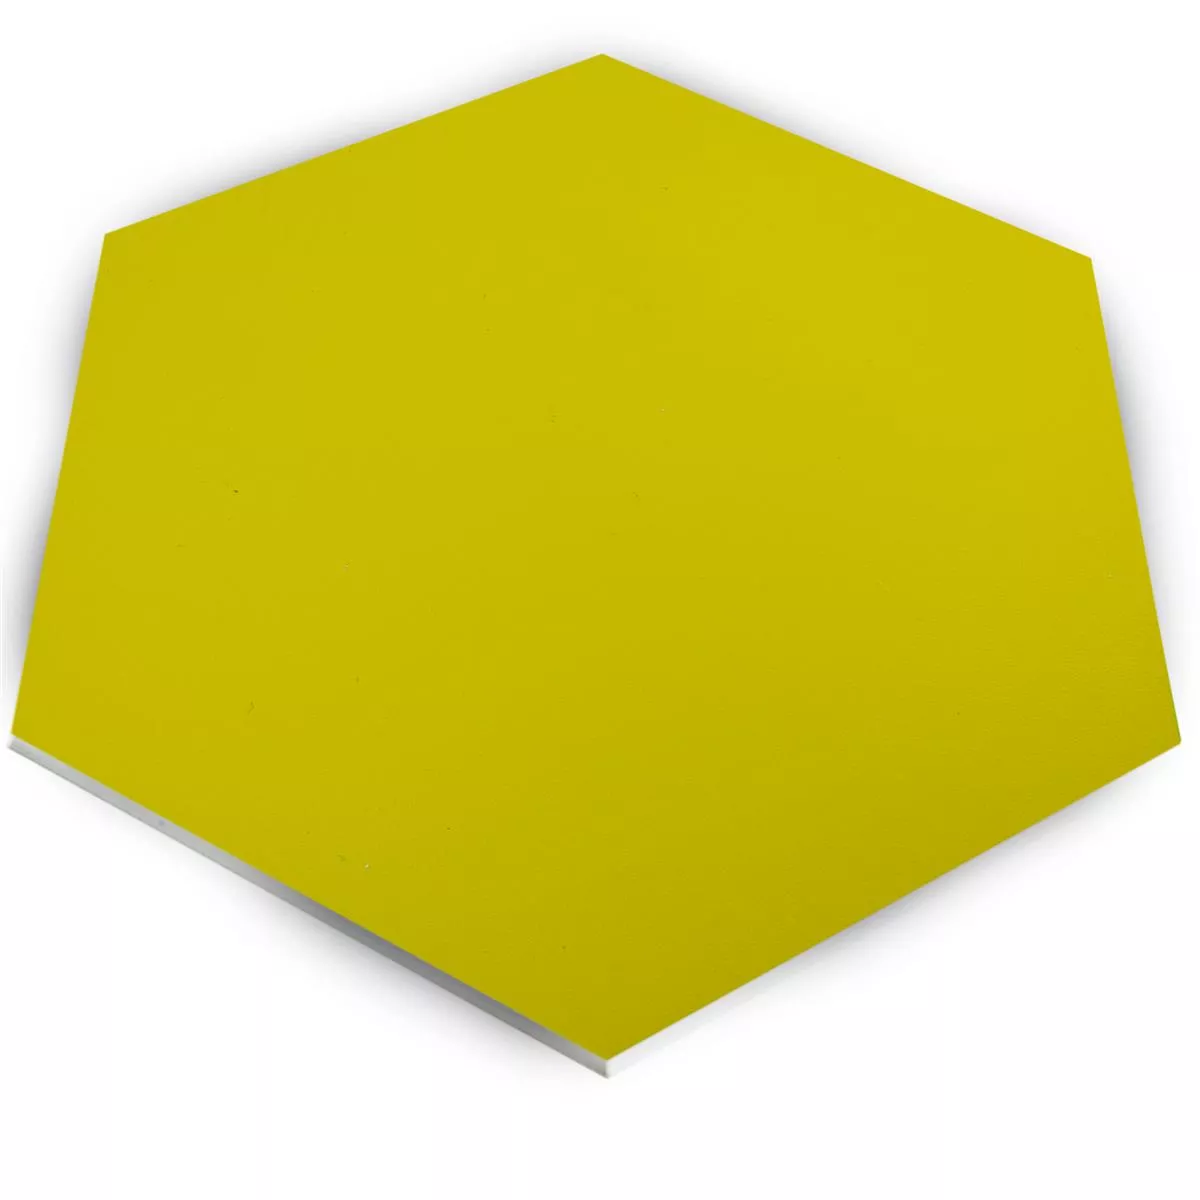 Vinyl Hexagon Wall Tile Century Self Adhesive Yellow